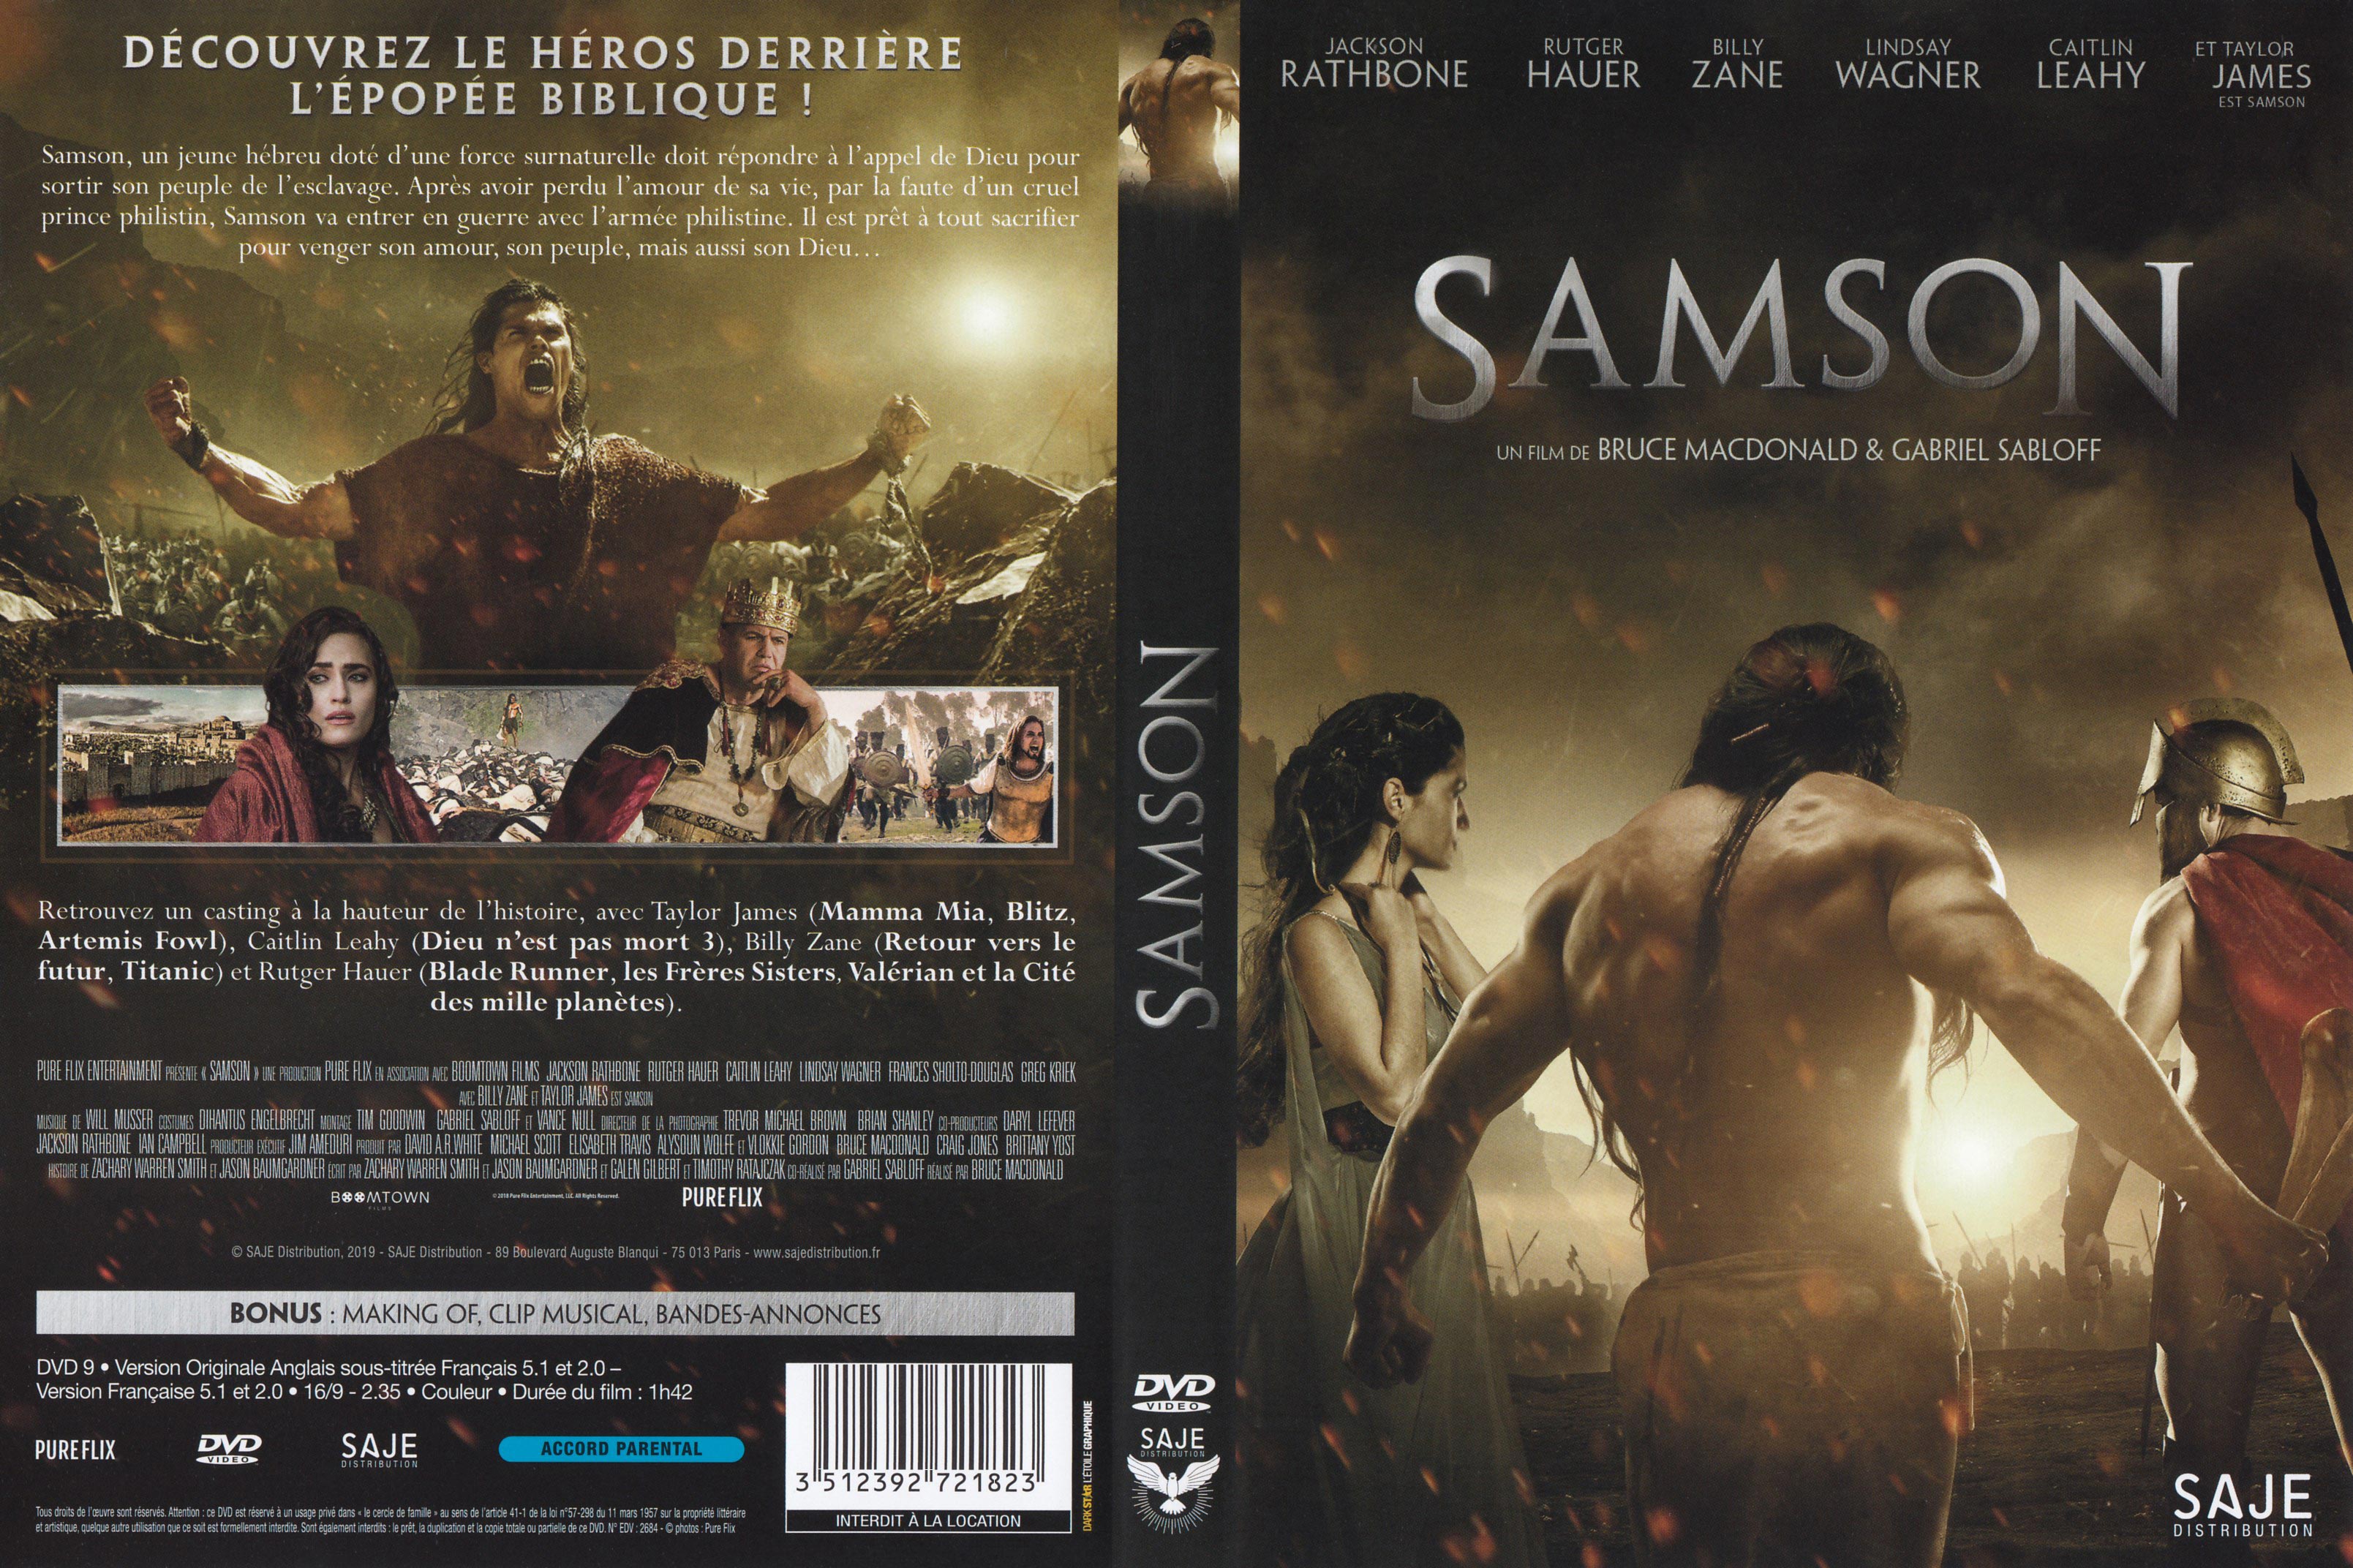 Jaquette DVD Samson (2019)